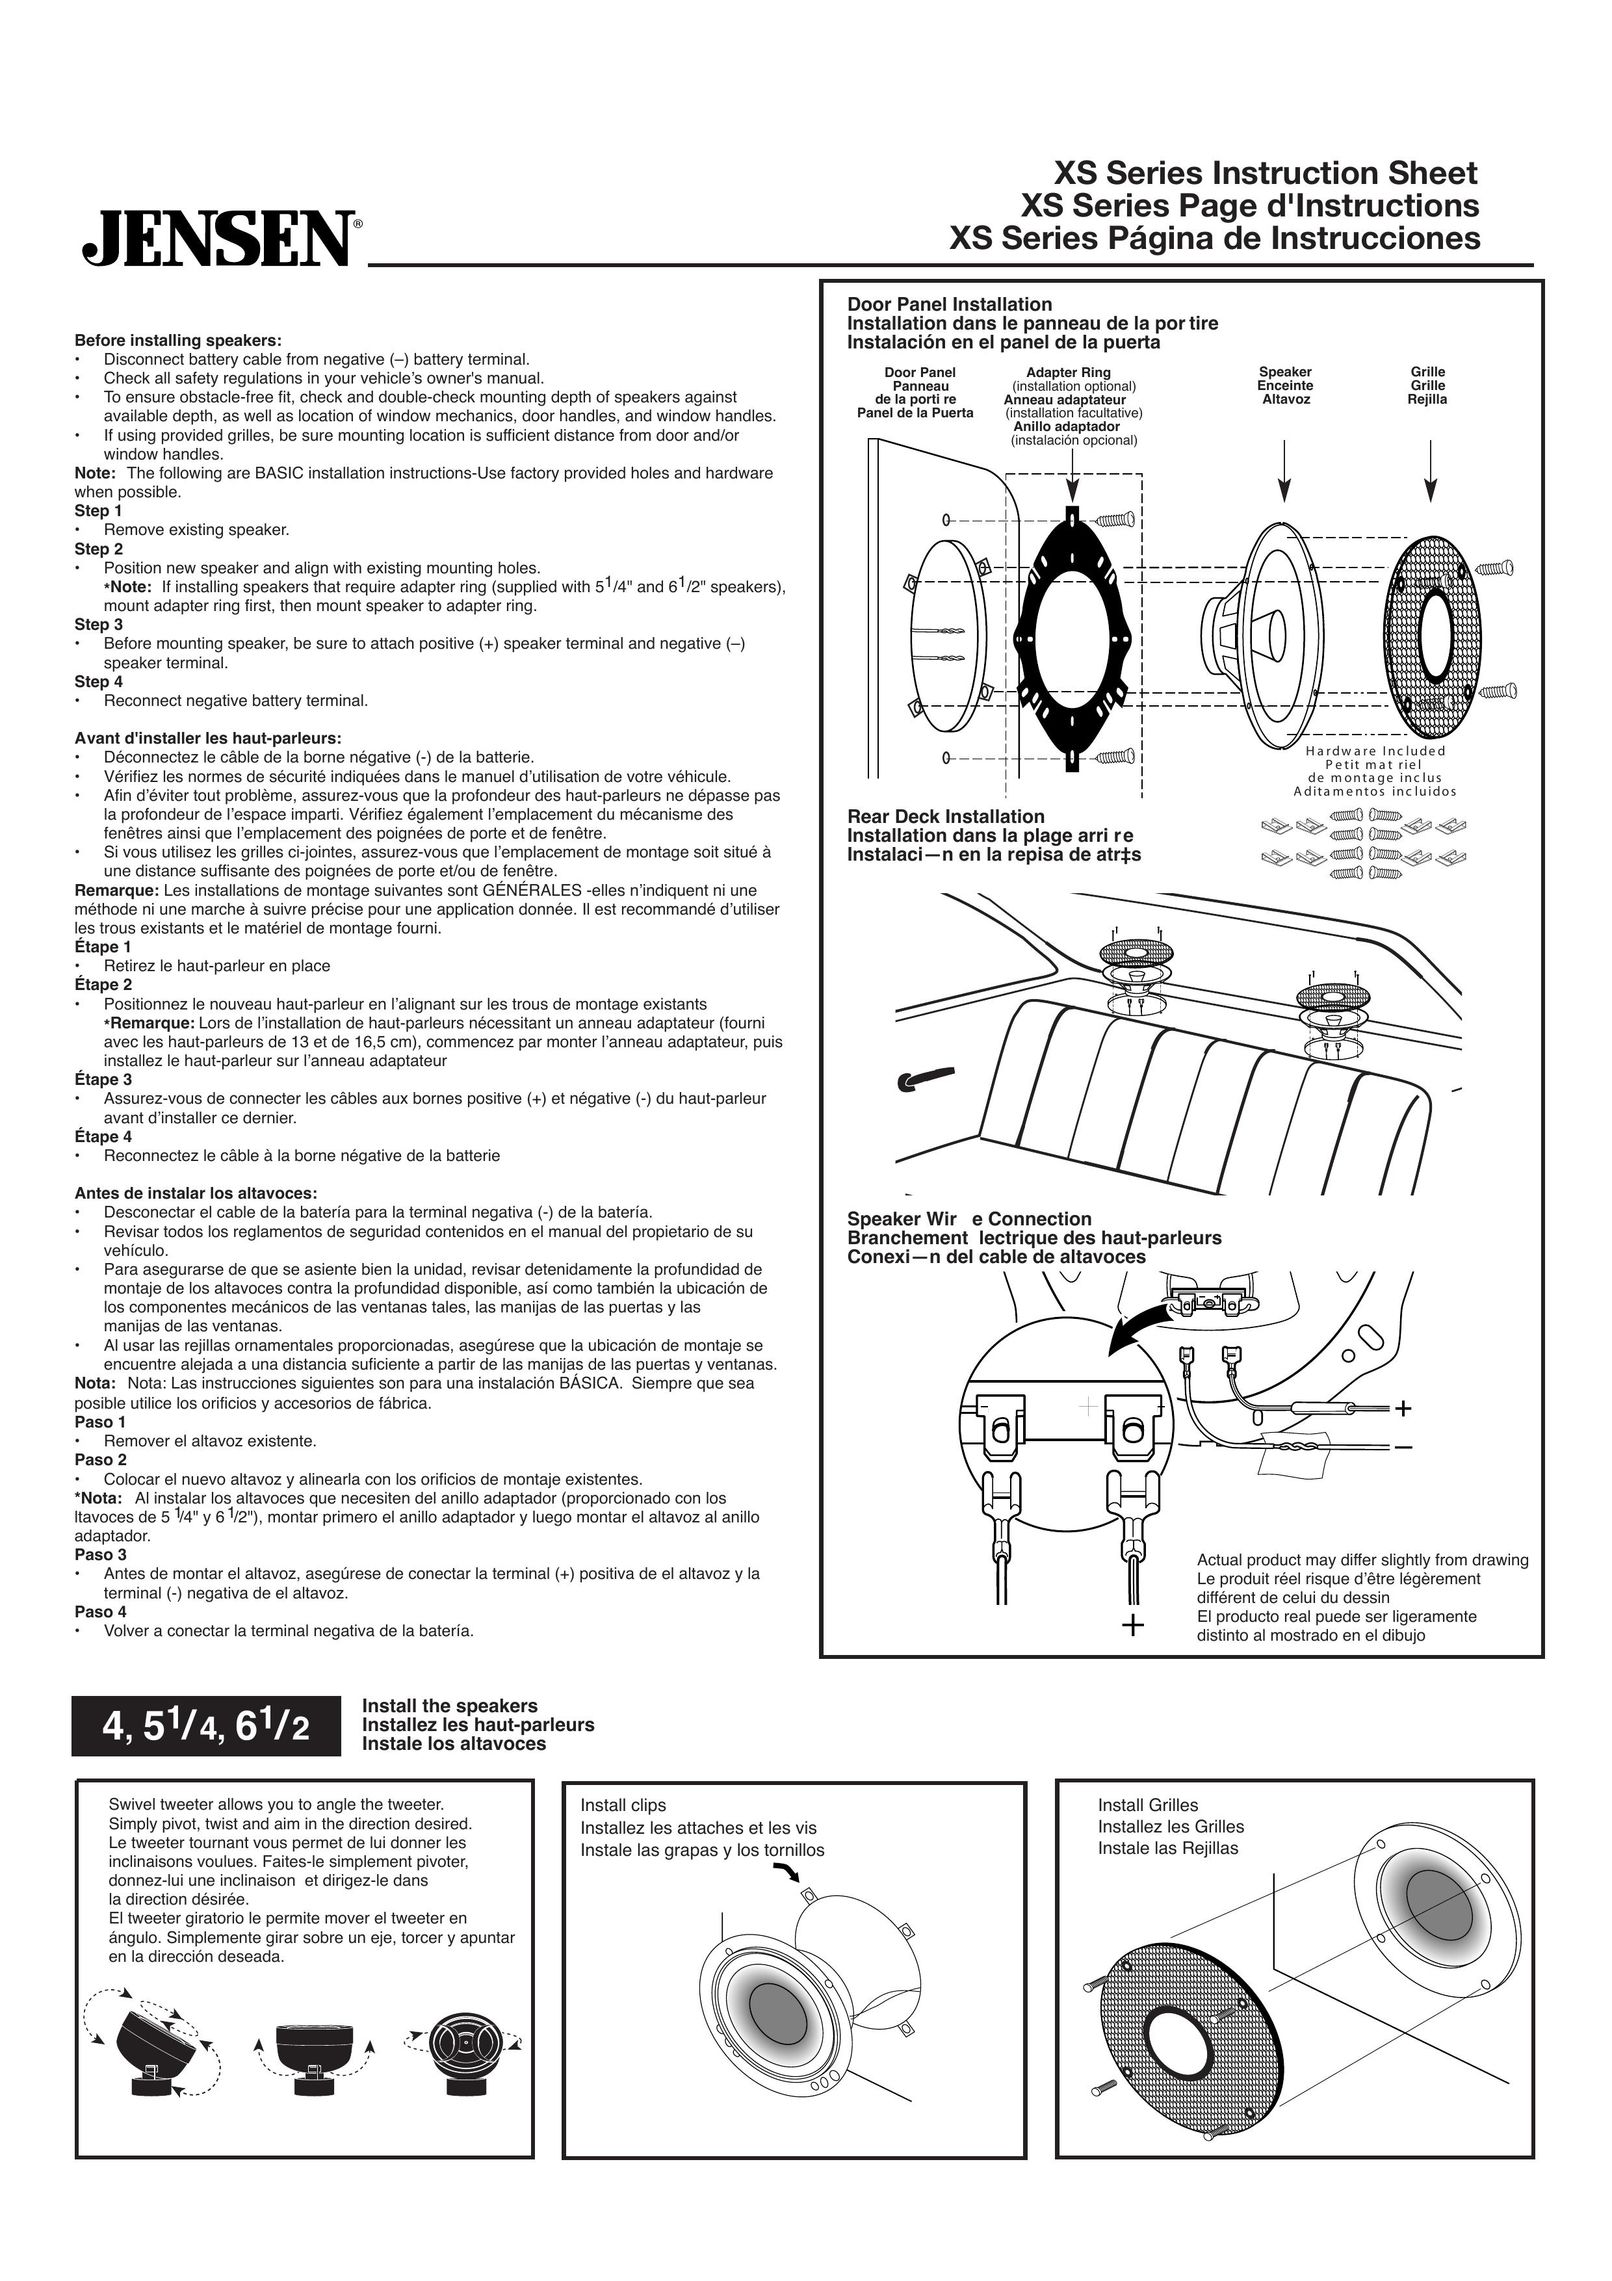 Jensen XS Series Portable Speaker User Manual